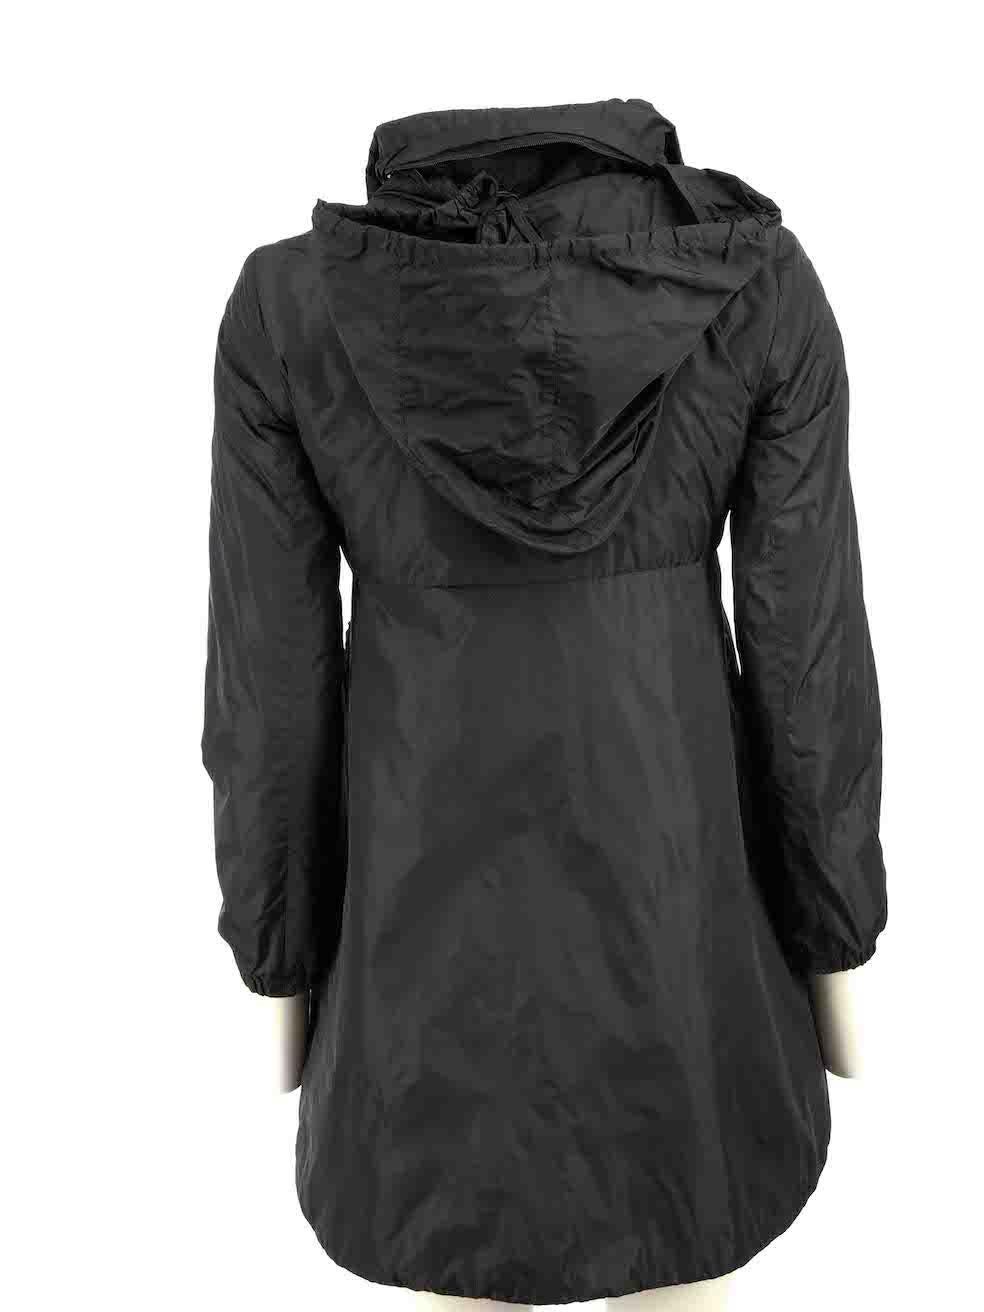 Prada Prada Sport Black Waterproof Jacket Size XS In Excellent Condition For Sale In London, GB